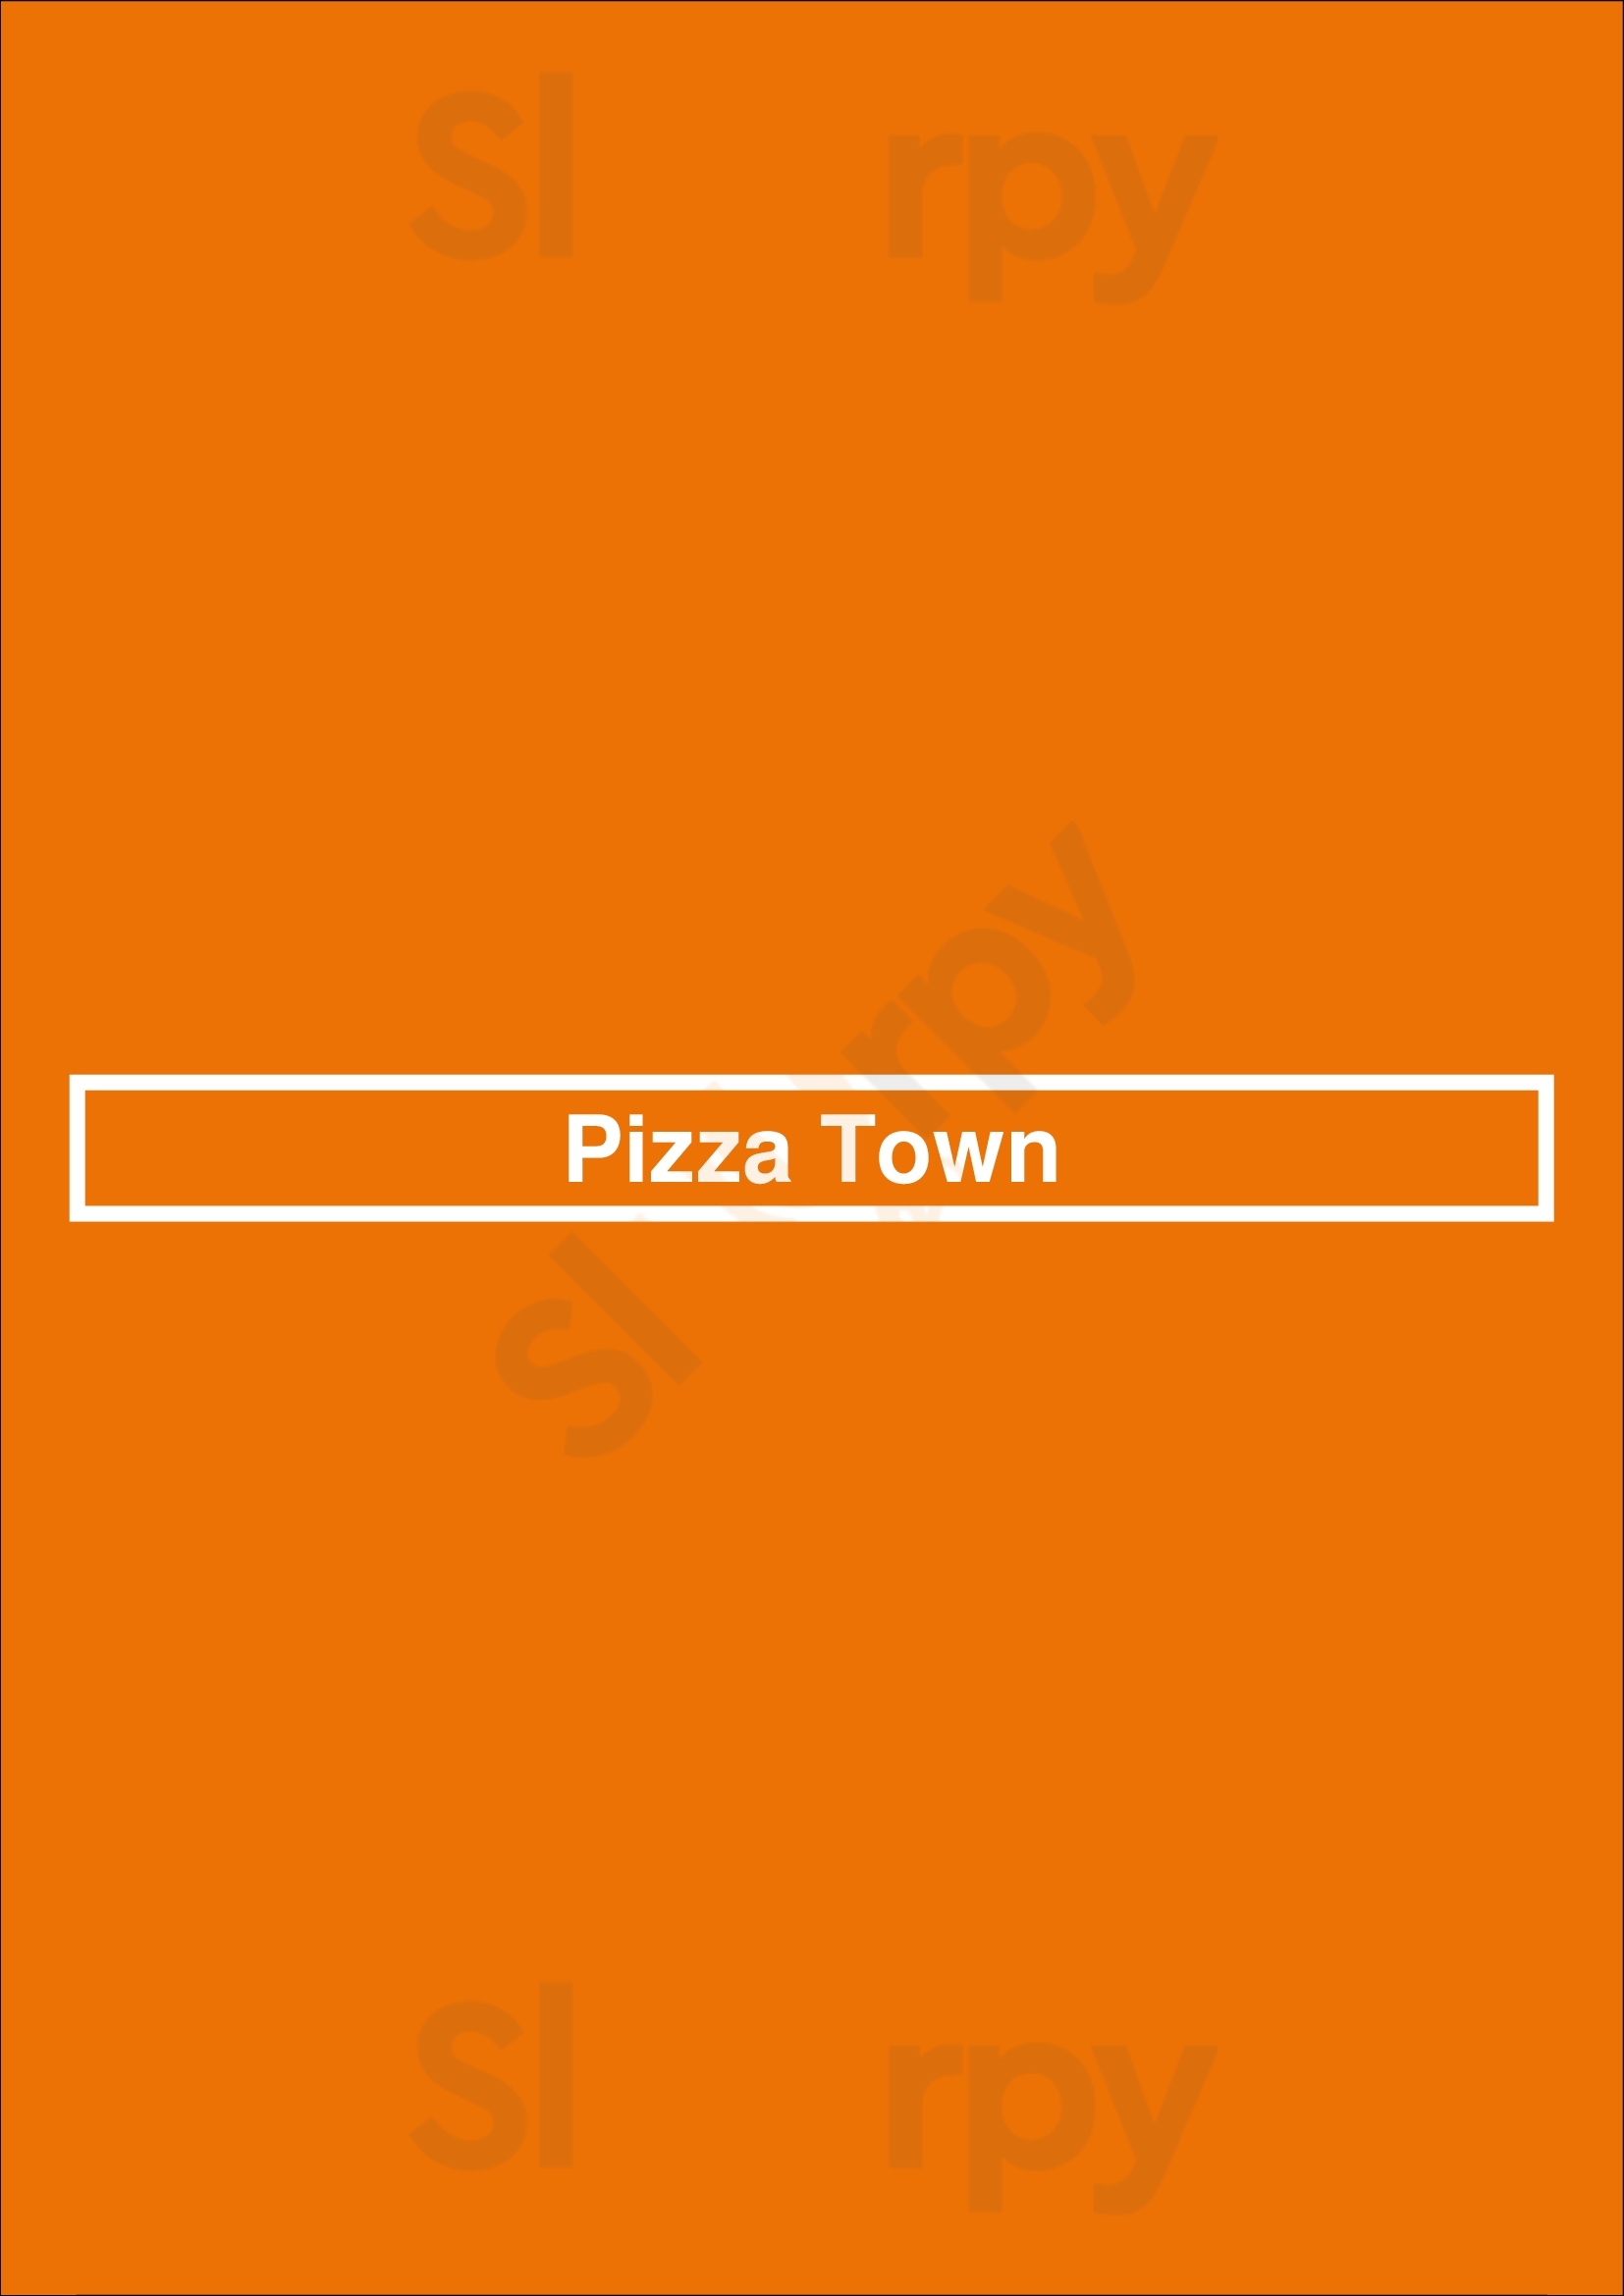 Pizza Town Braintree Menu - 1